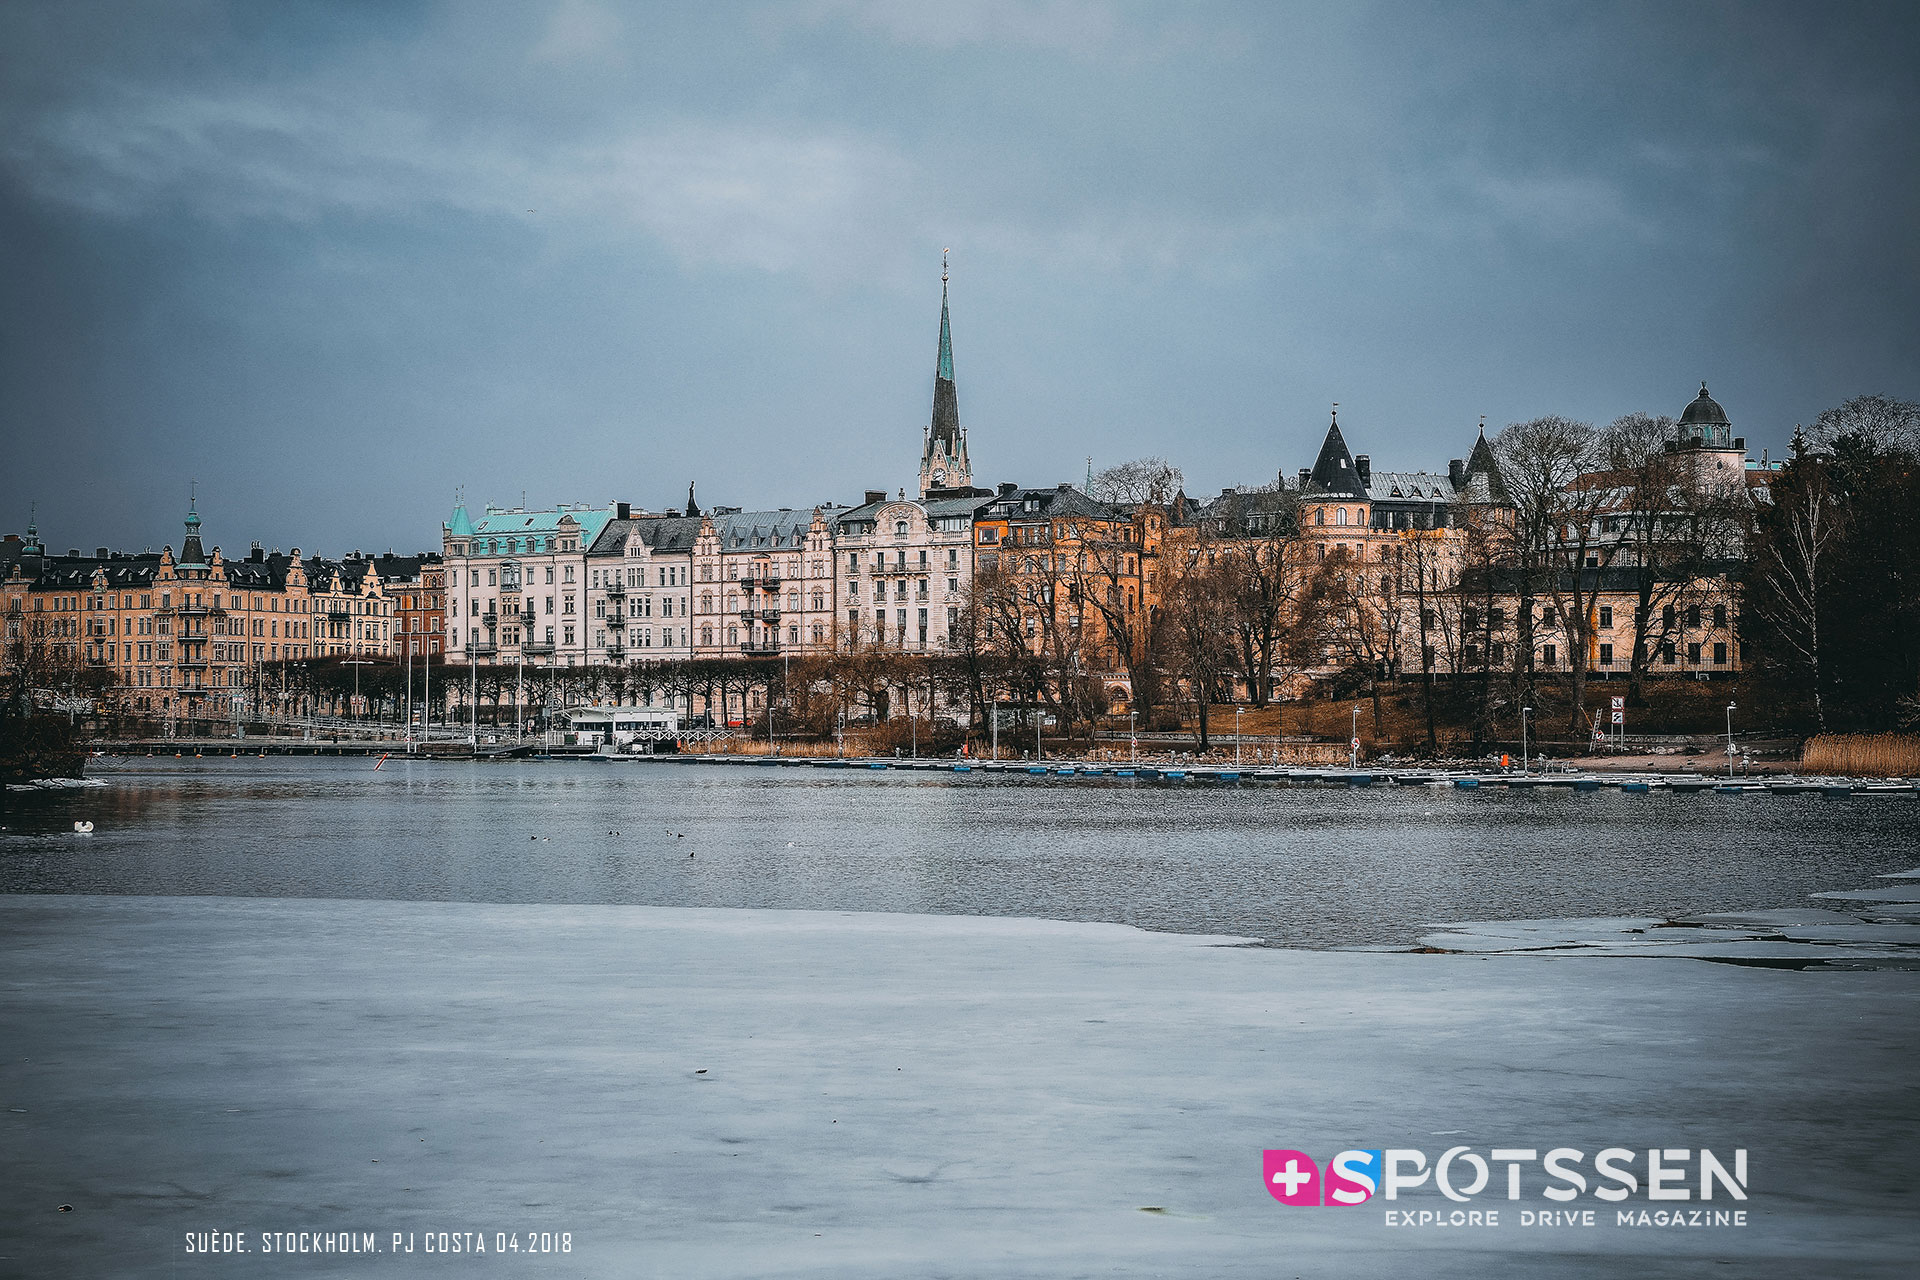 2019, stockholm, scandinavie